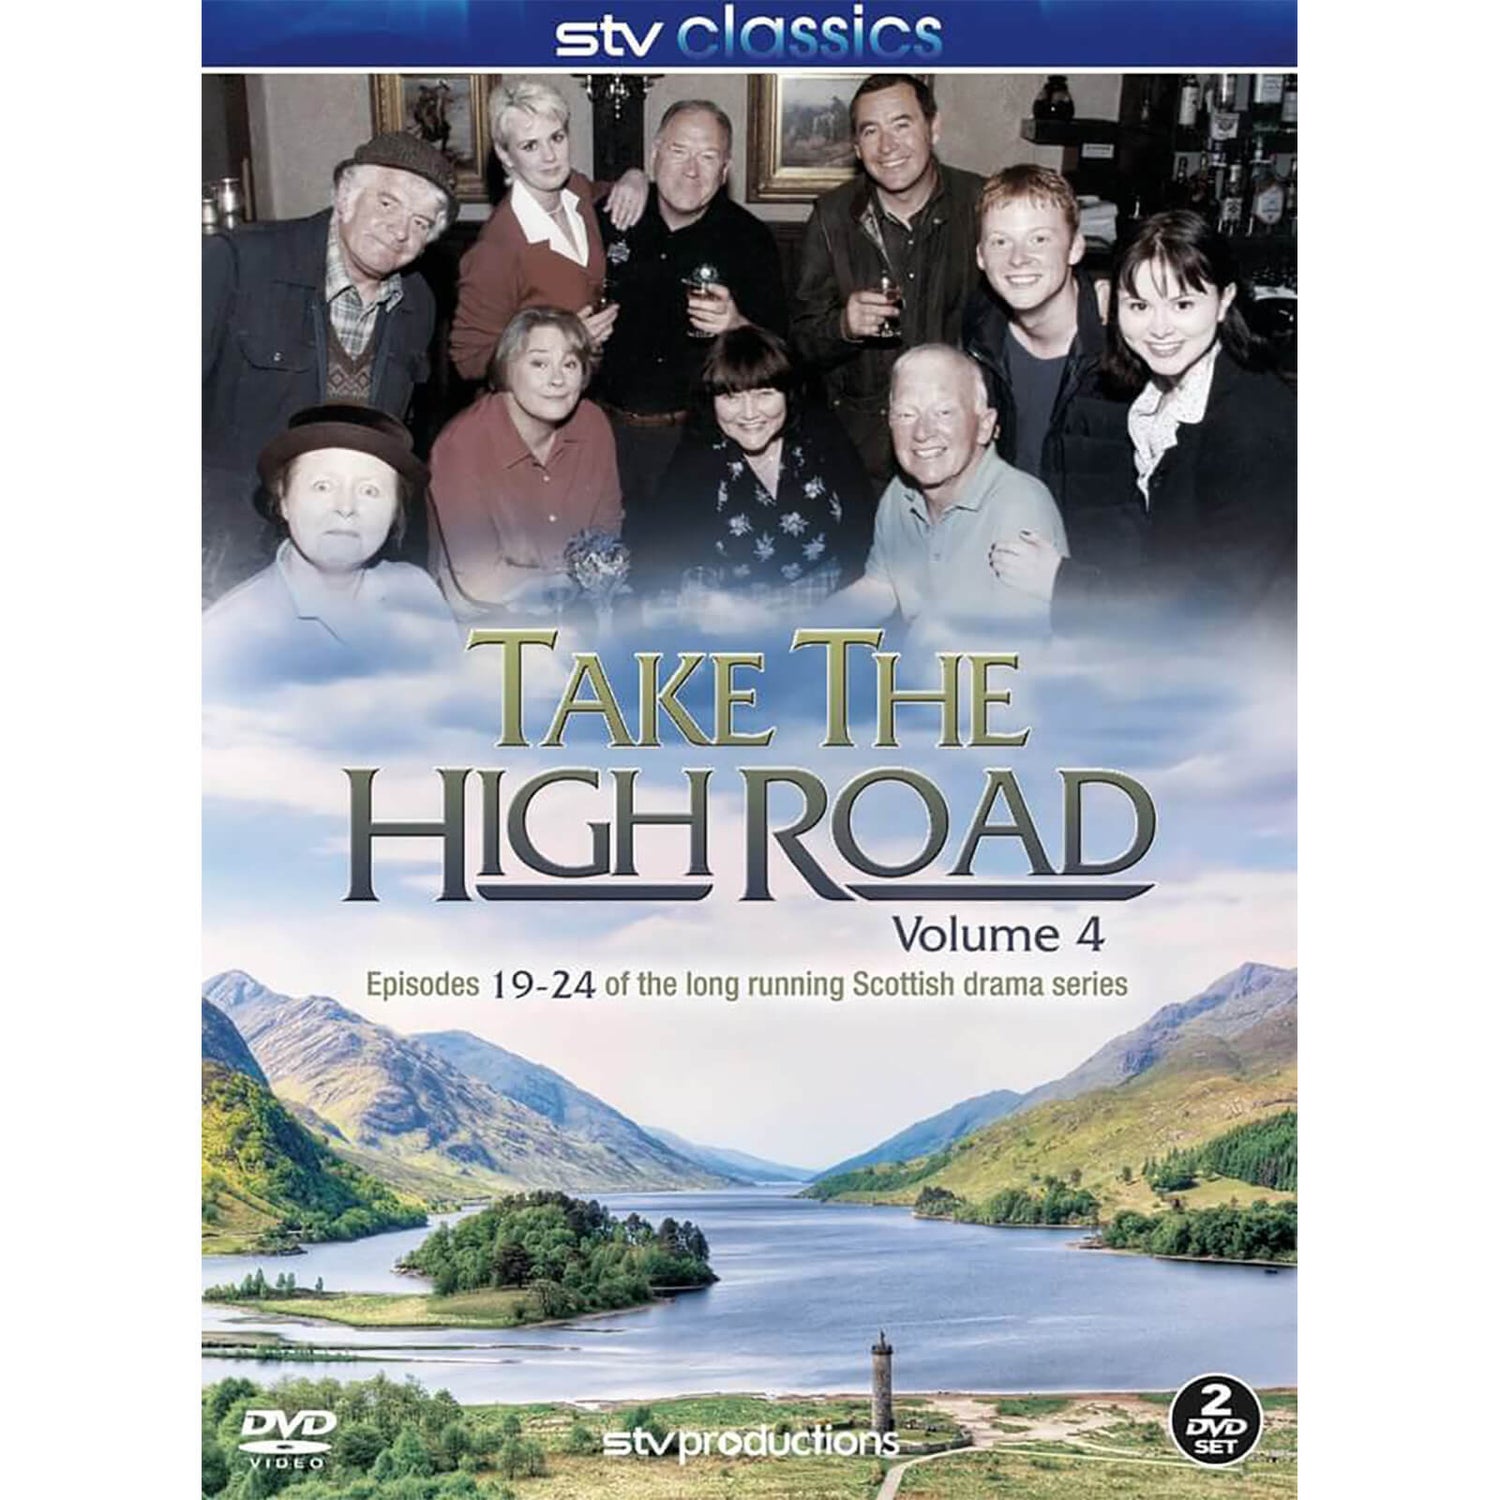 Take High Road - Volume 4